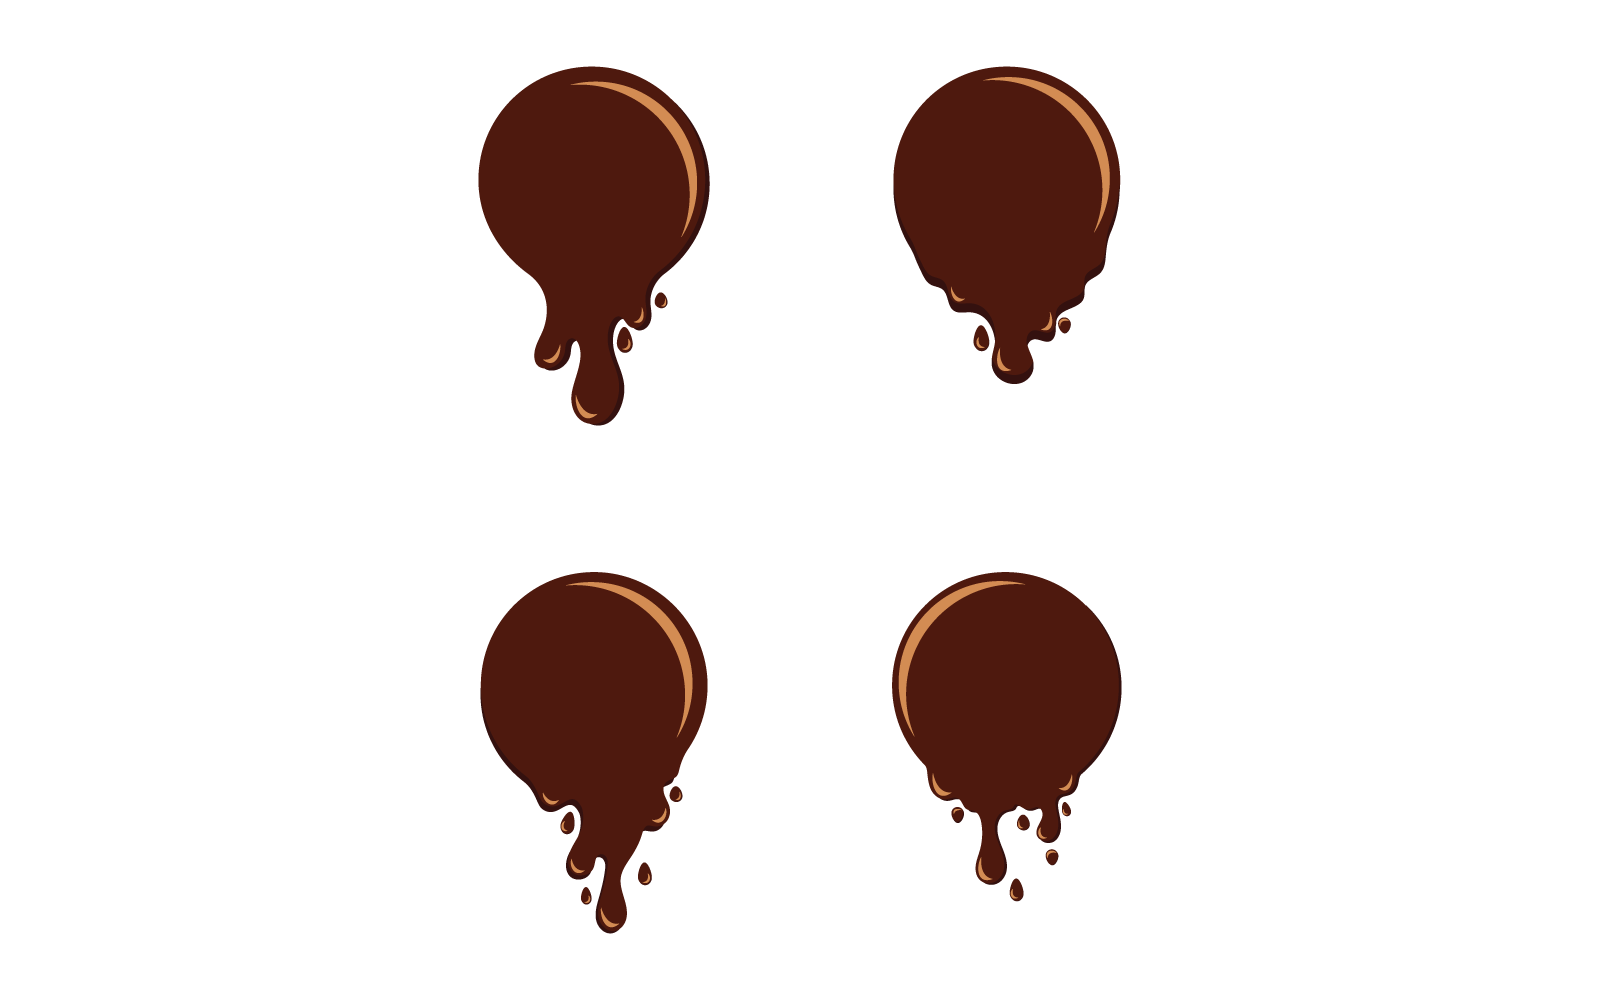 Chocolate illustration vector flat design